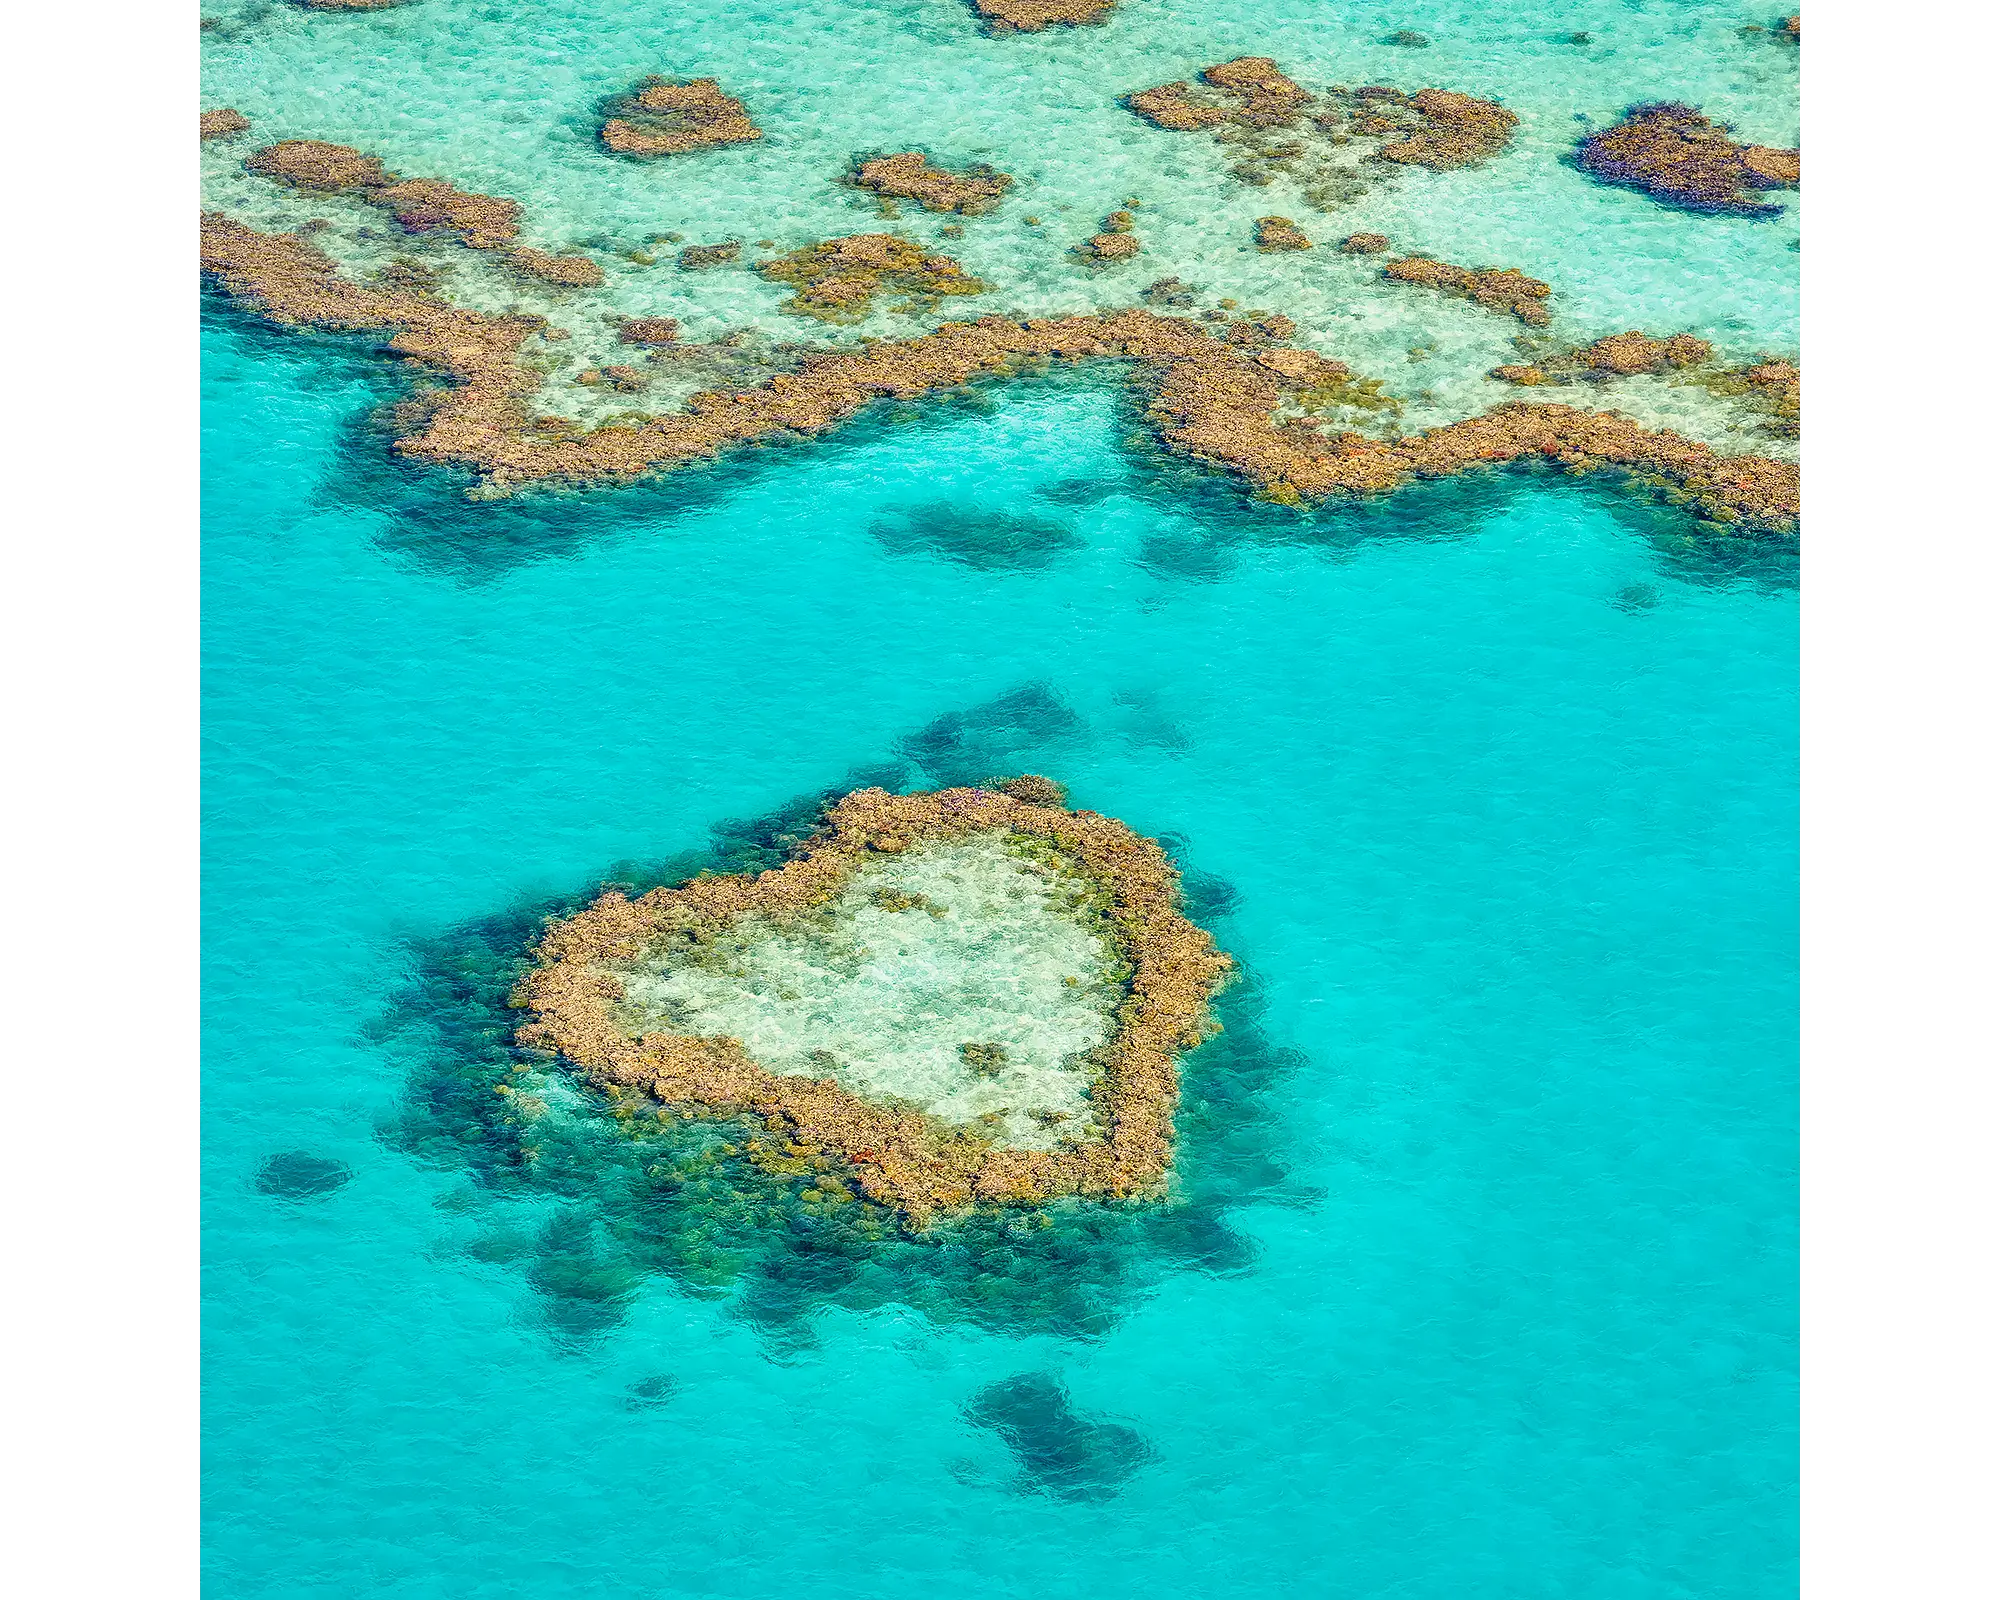 The Heart. Aerial view of Heart Reef, Great Barrier Reef, Queensland, Australia